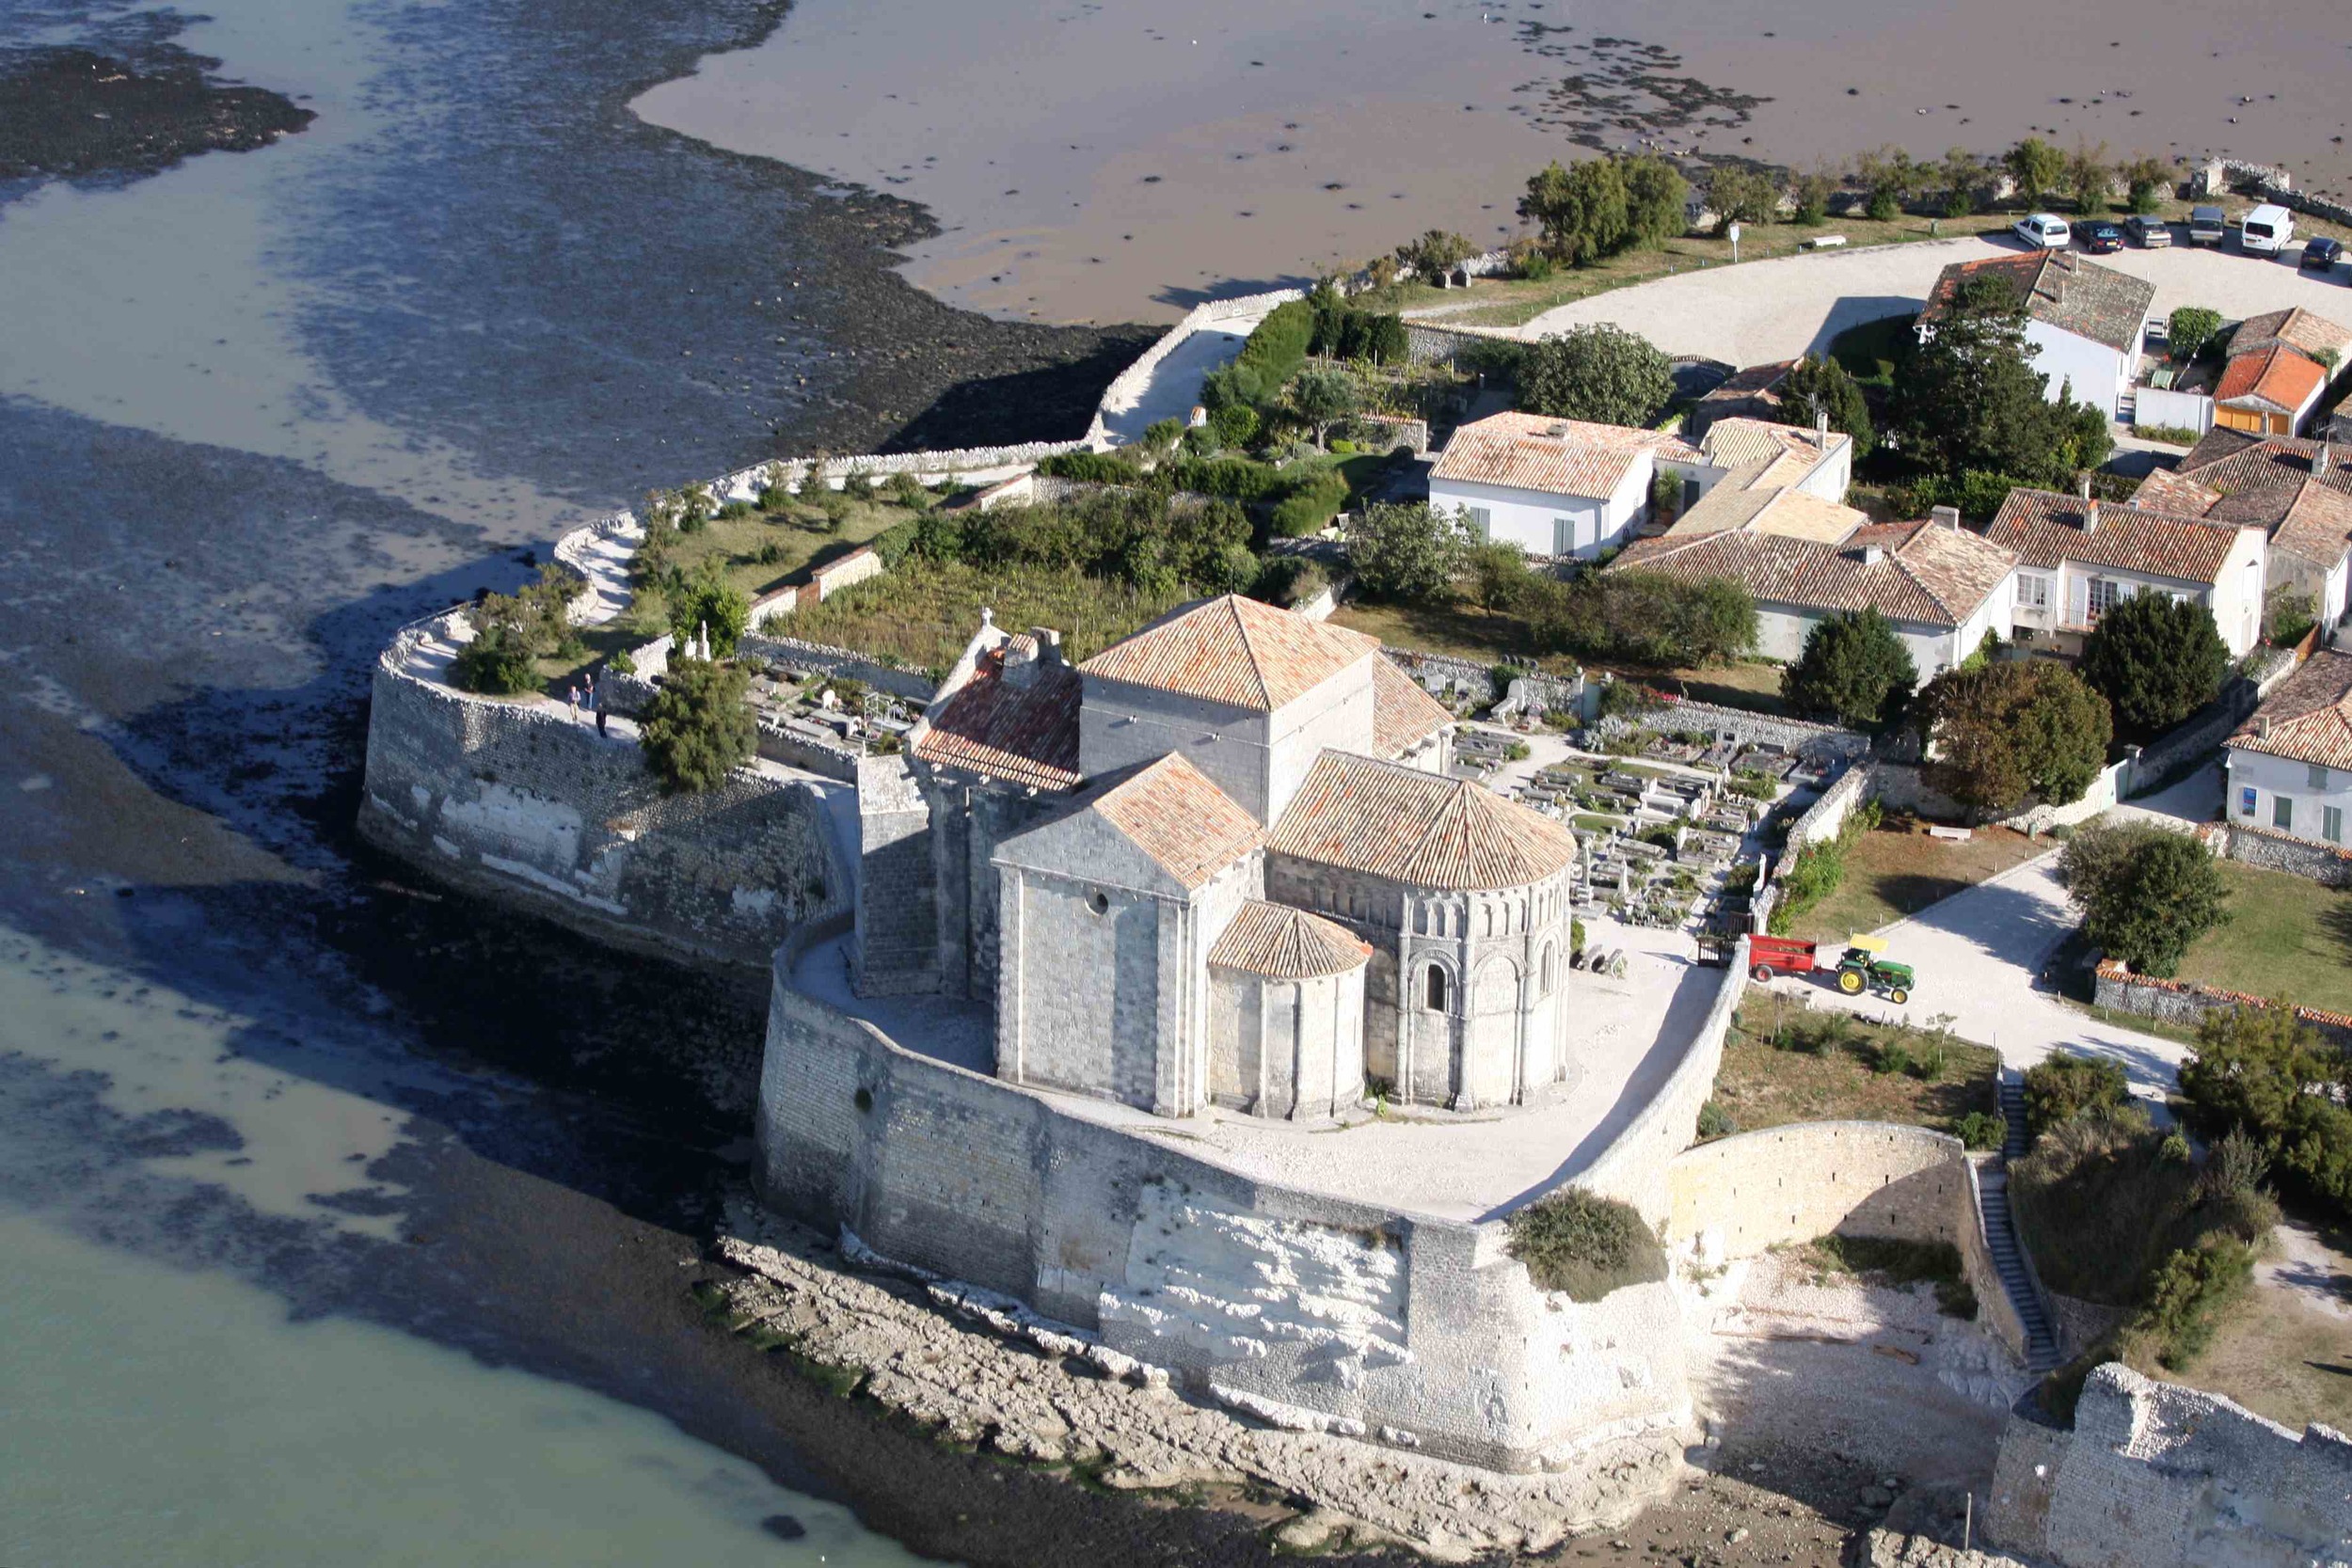 The 13th century church, aside the Gironde Estuary